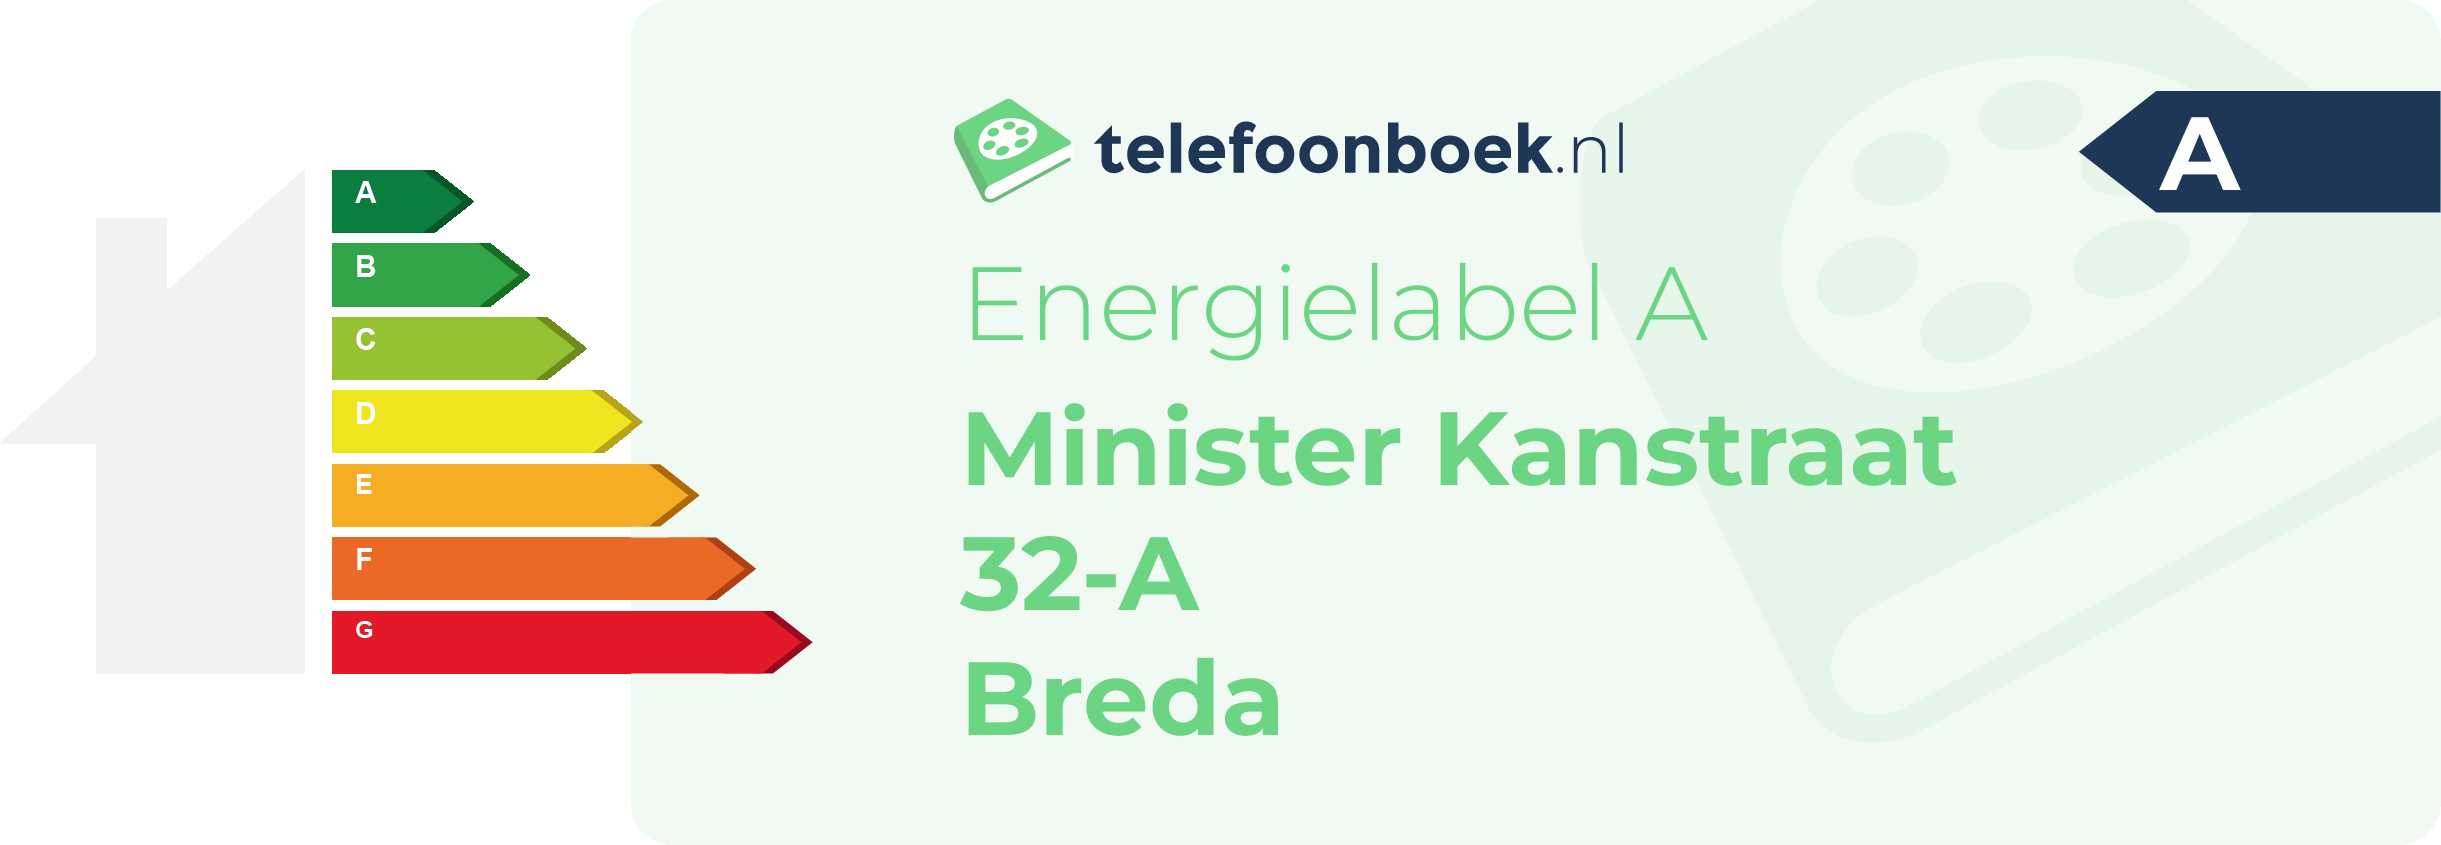 Energielabel Minister Kanstraat 32-A Breda